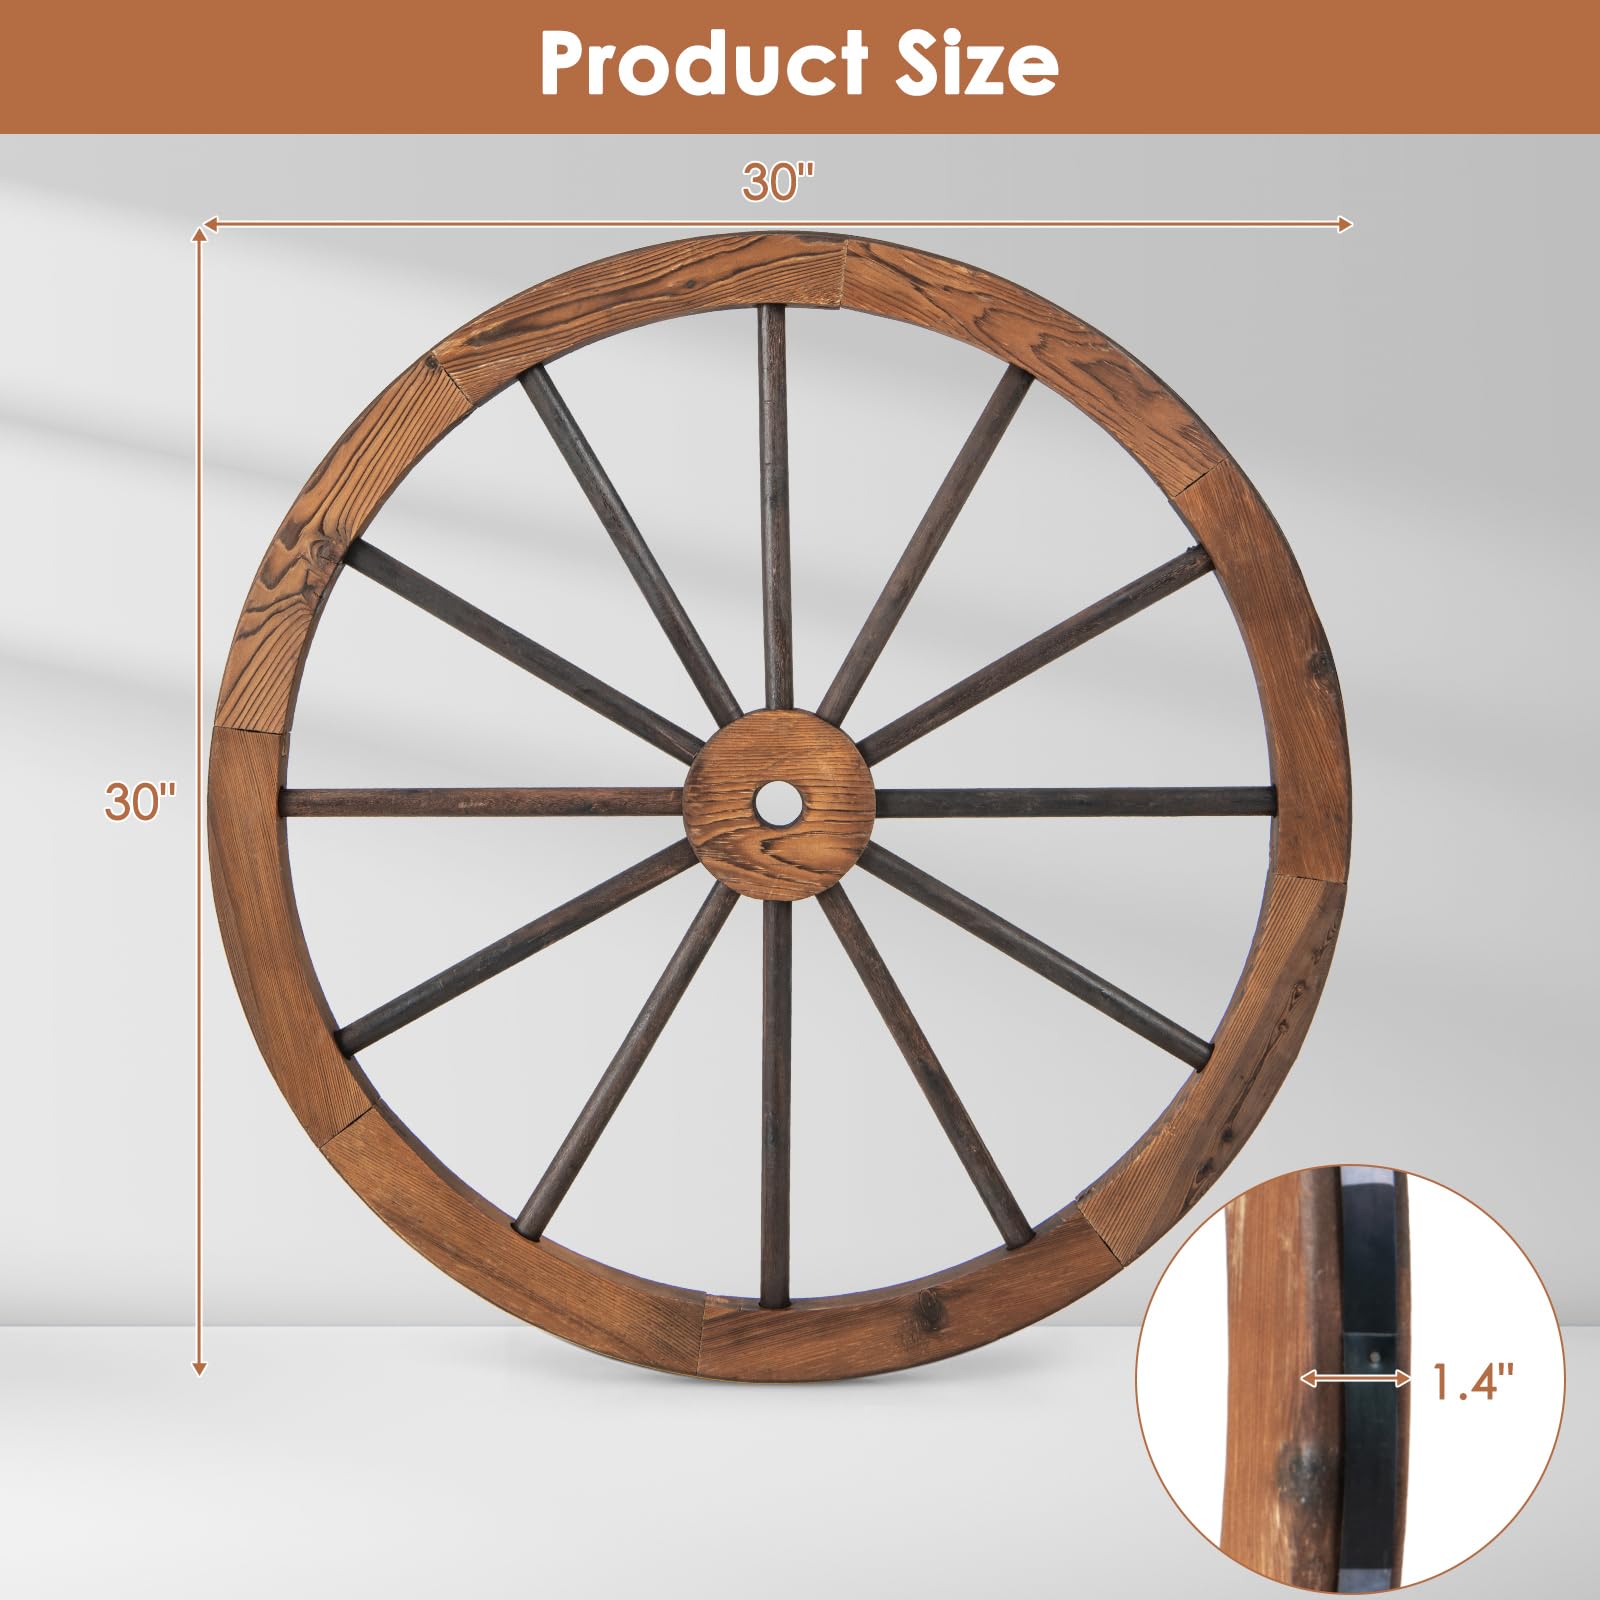 Giantex 30-Inch Wagon Wheels 4 Pieces, Decorative Wooden Wheels